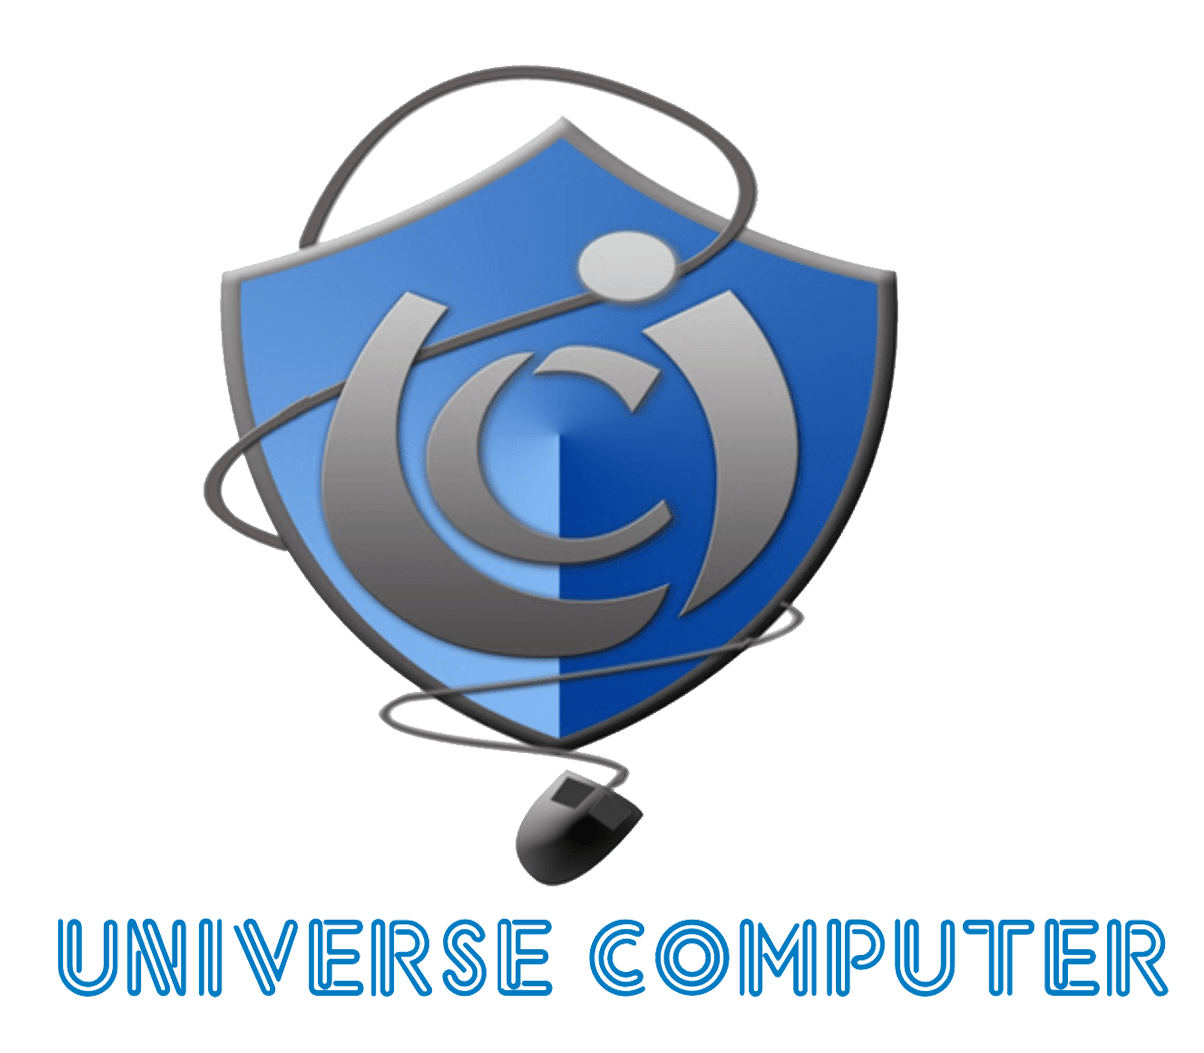 Universe Computer